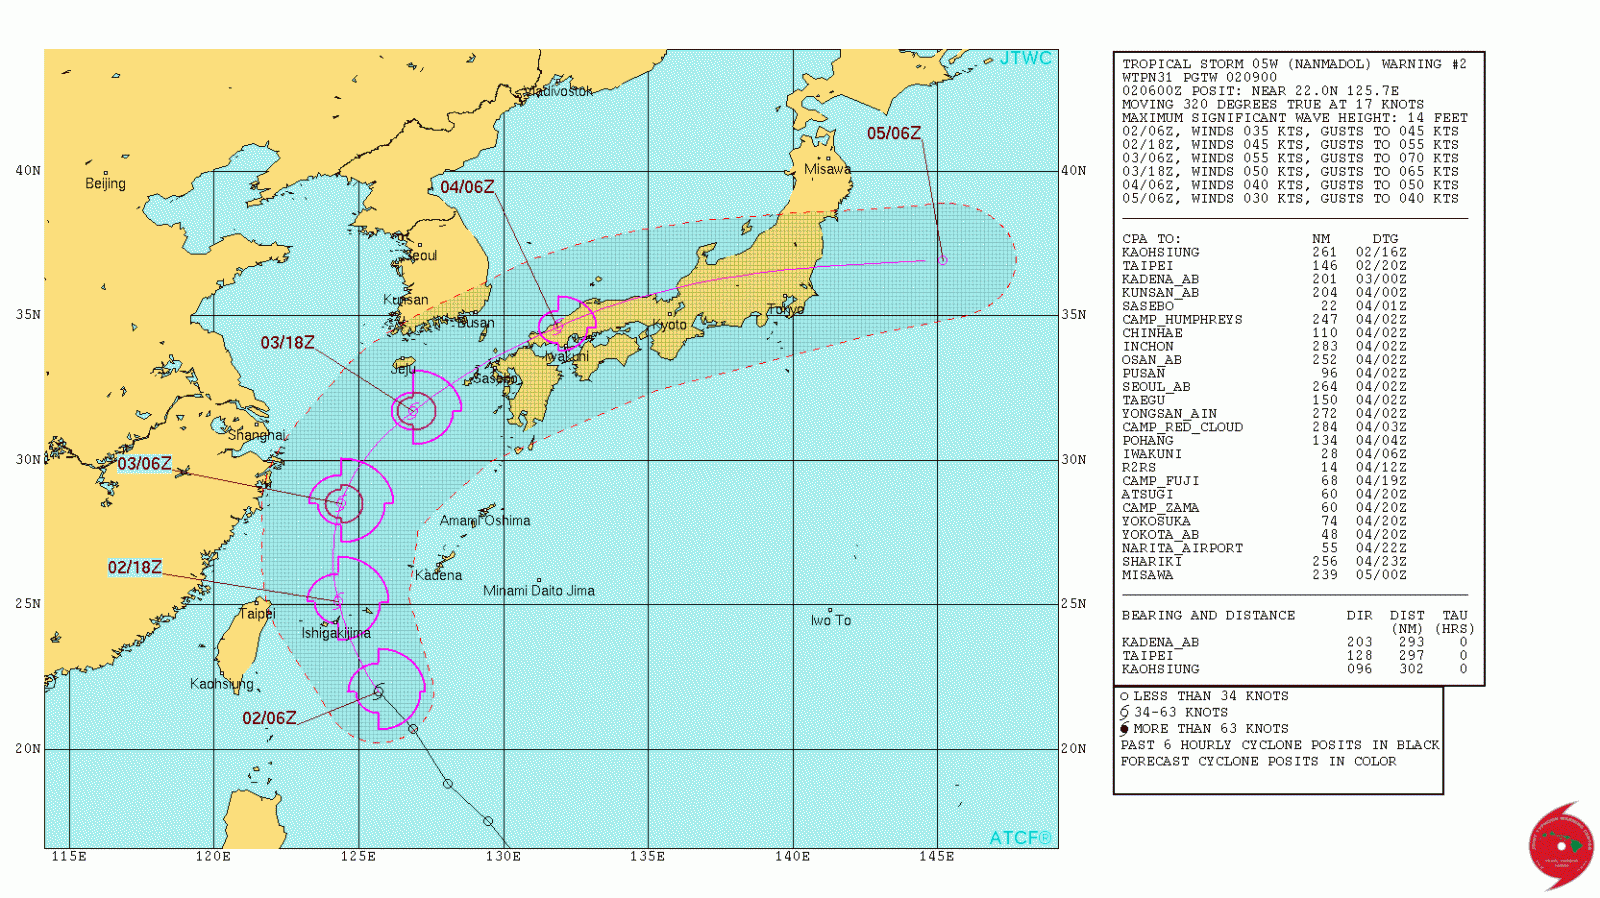 Tropical Storm Nanmadol forecast track by JTWC on July 2, 2017